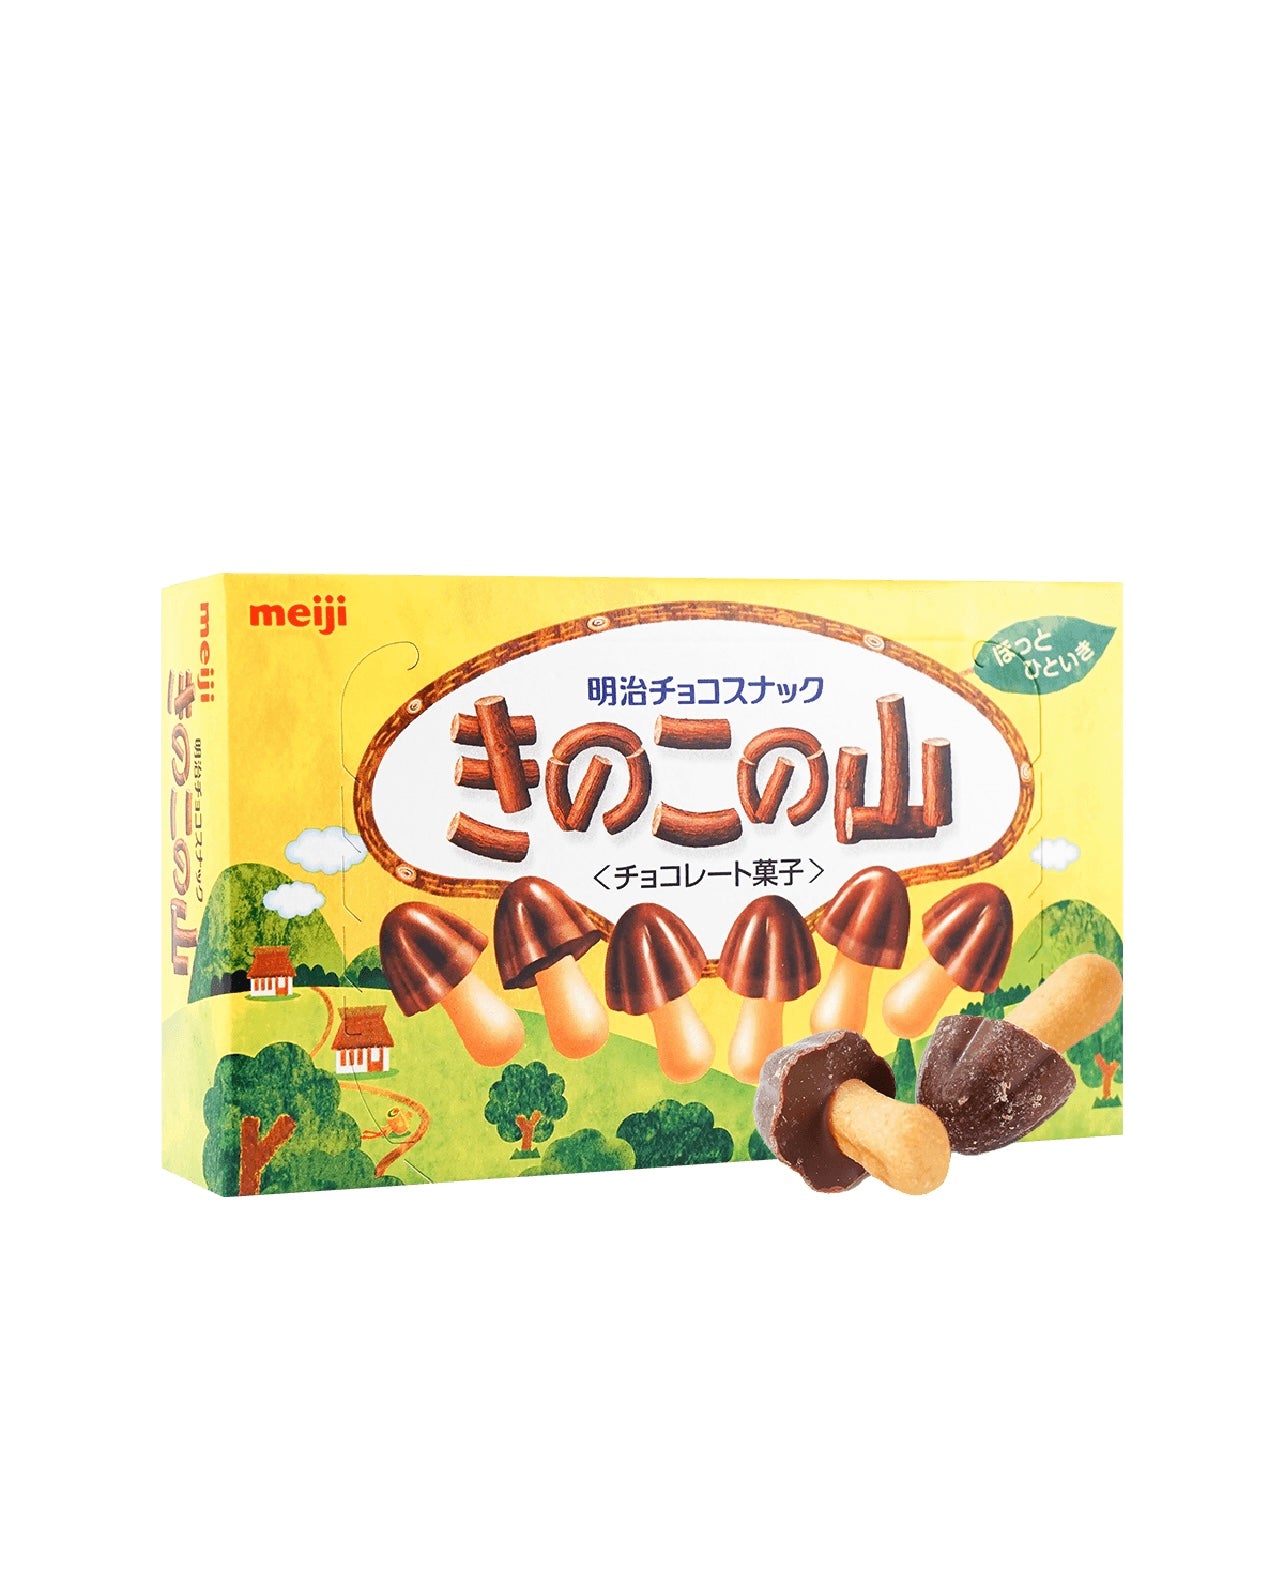 Mushroom Mountain
Chocolate Cookies, 2.61oz - Japan